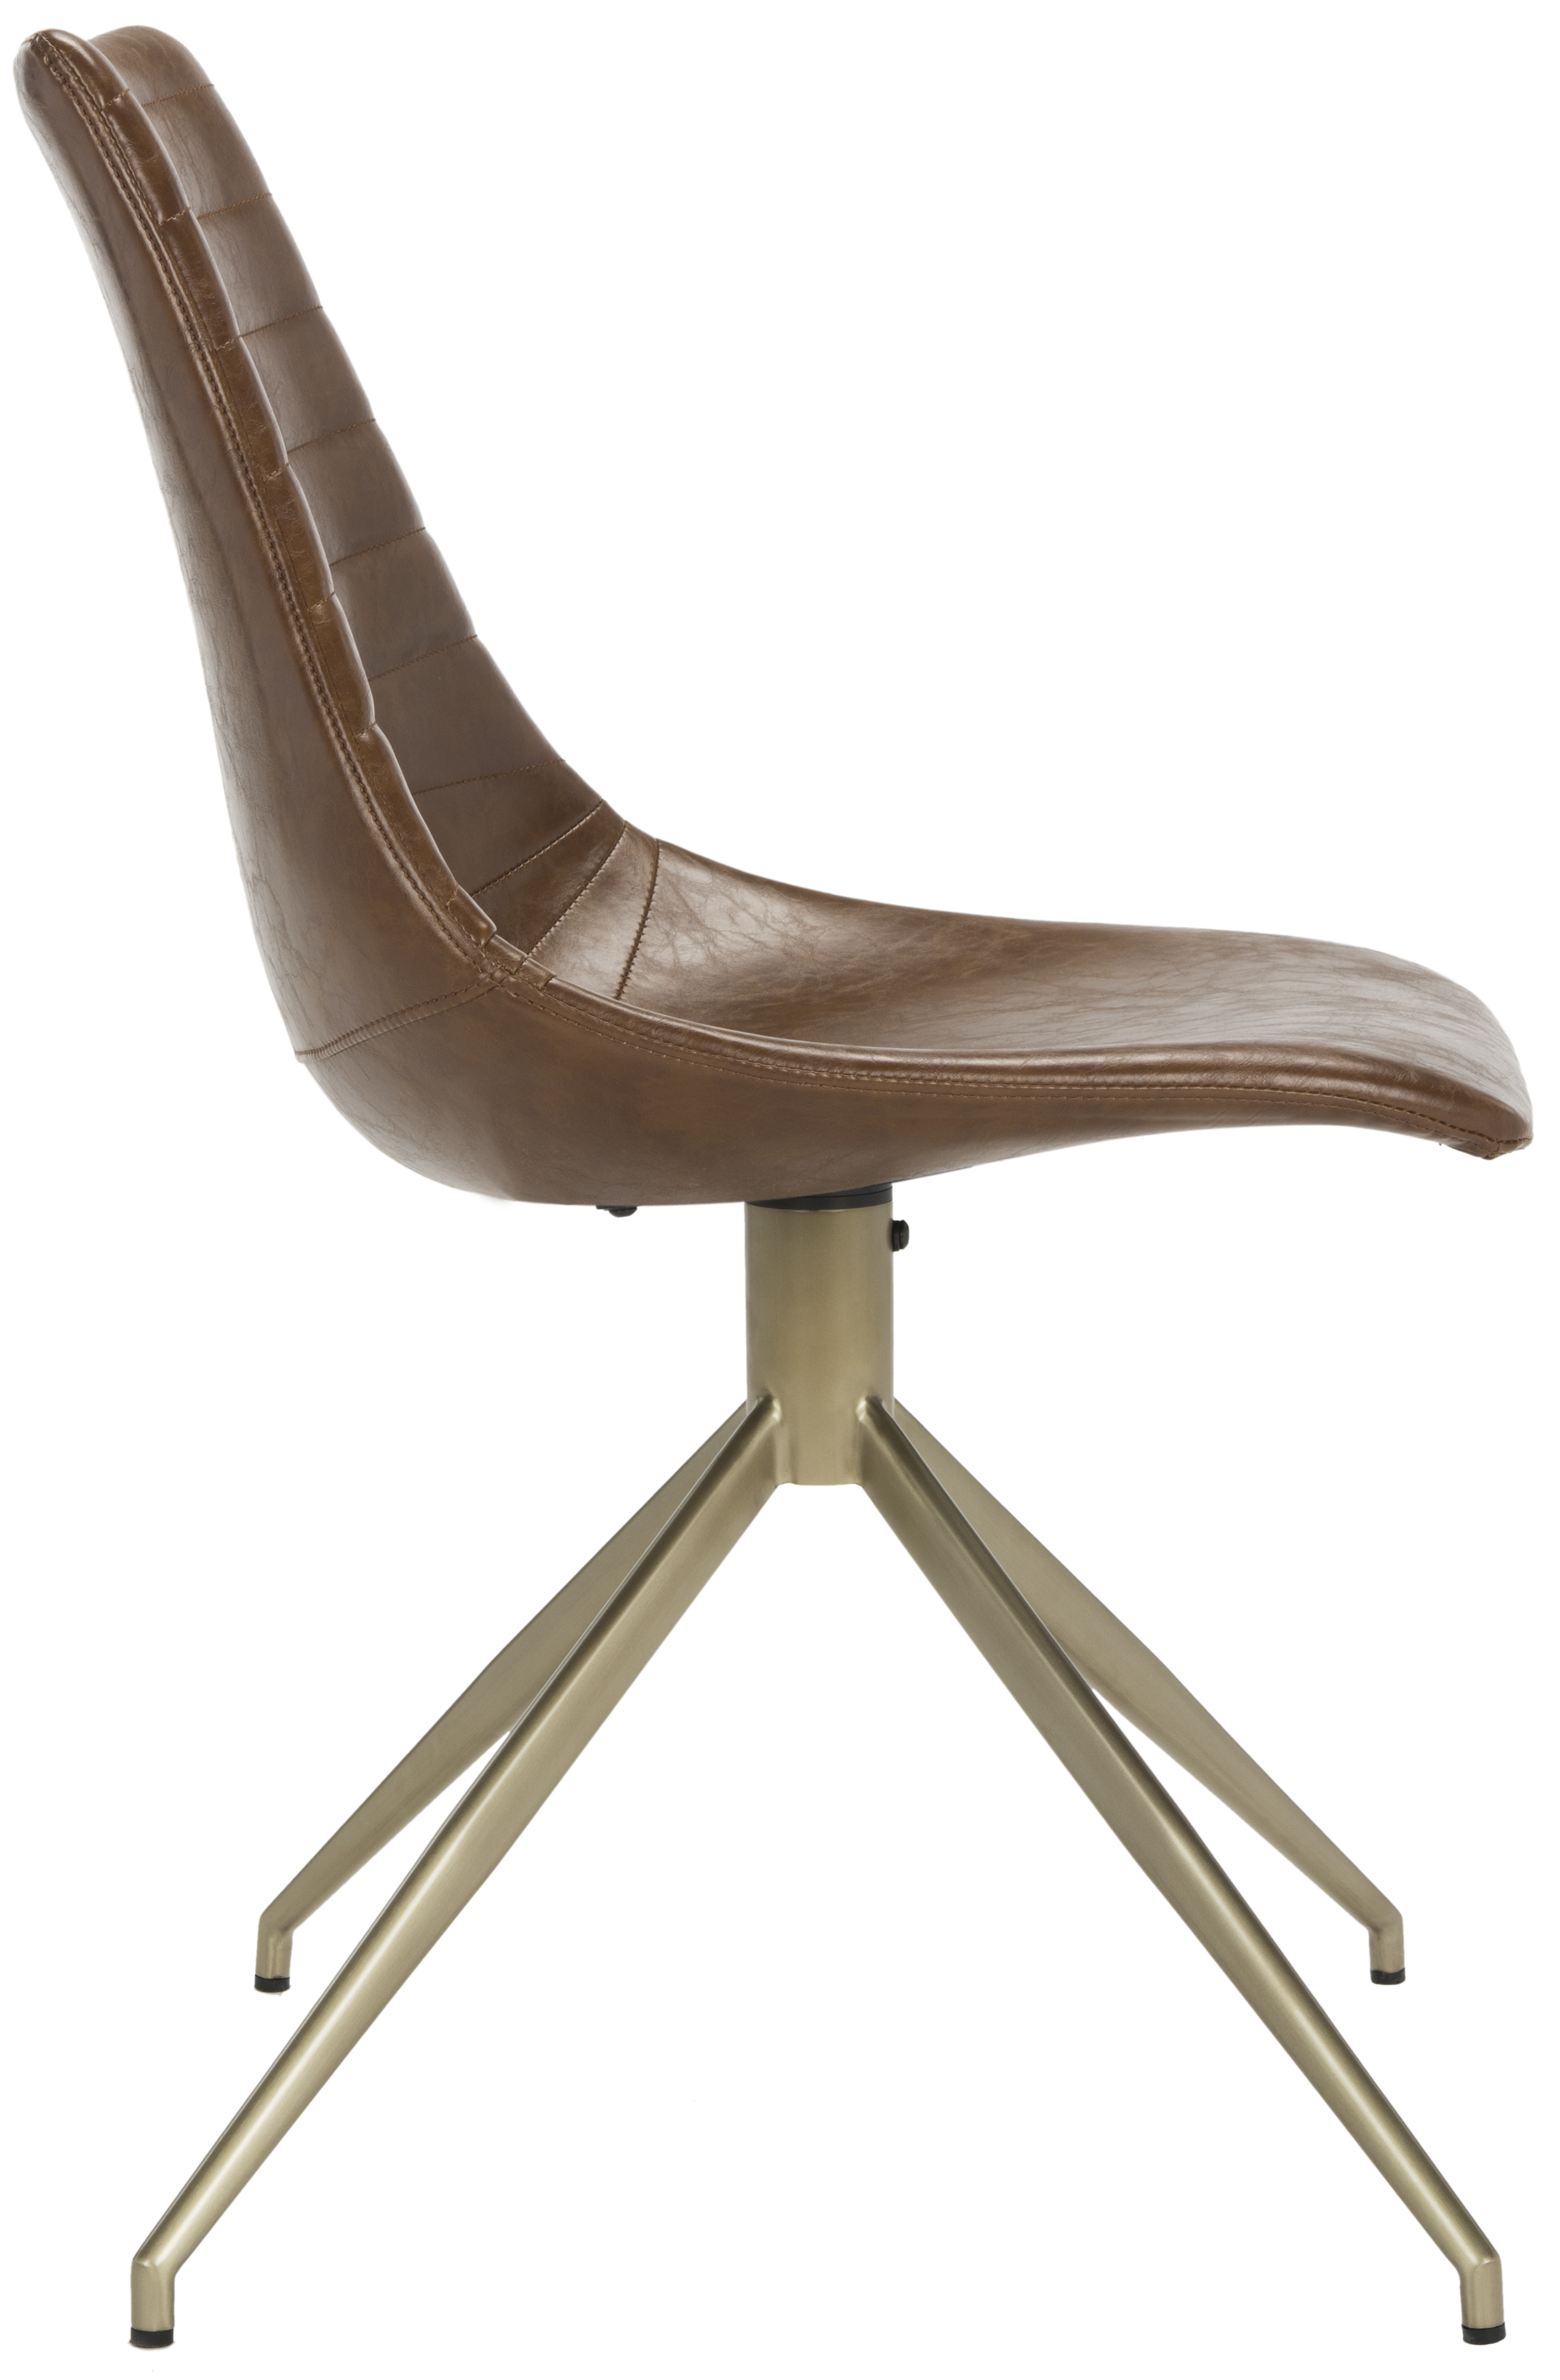 Lynette Midcentury Modern Leather Swivel Dining Chair - Light Brown/Brass - Arlo Home - Image 2